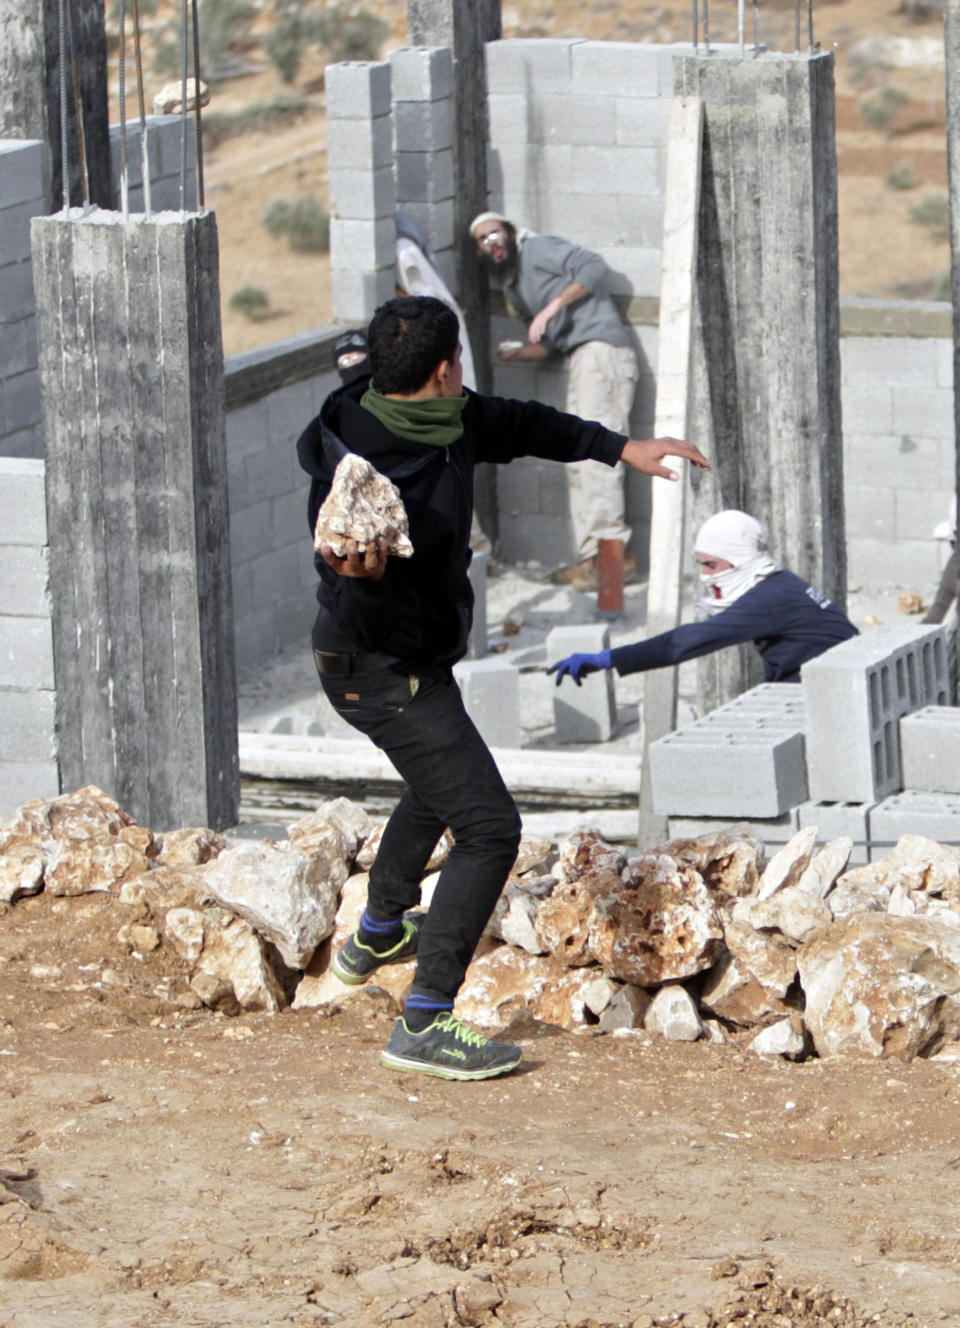 A Palestinian throws stones at Israeli settlers near the West Bank village of Qusra, Jan. 7, 2014. (AP Photo/Nasser Ishtayeh)